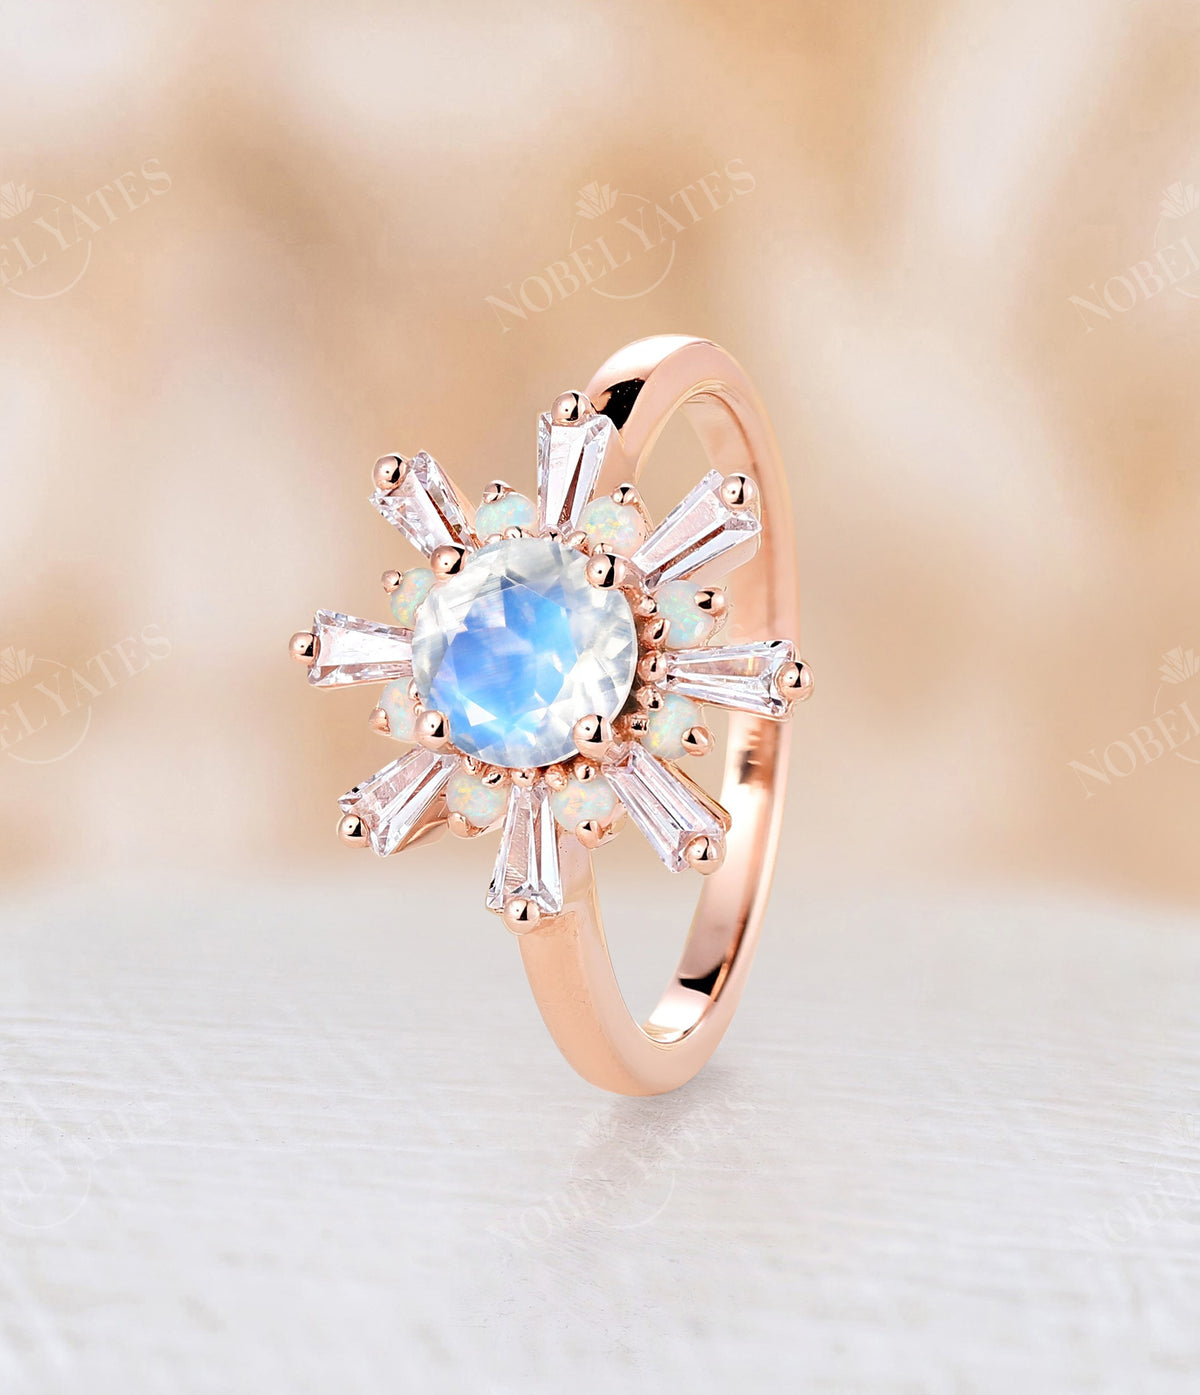 Moonstone Art Deco Round Engagement Ring Rose Gold